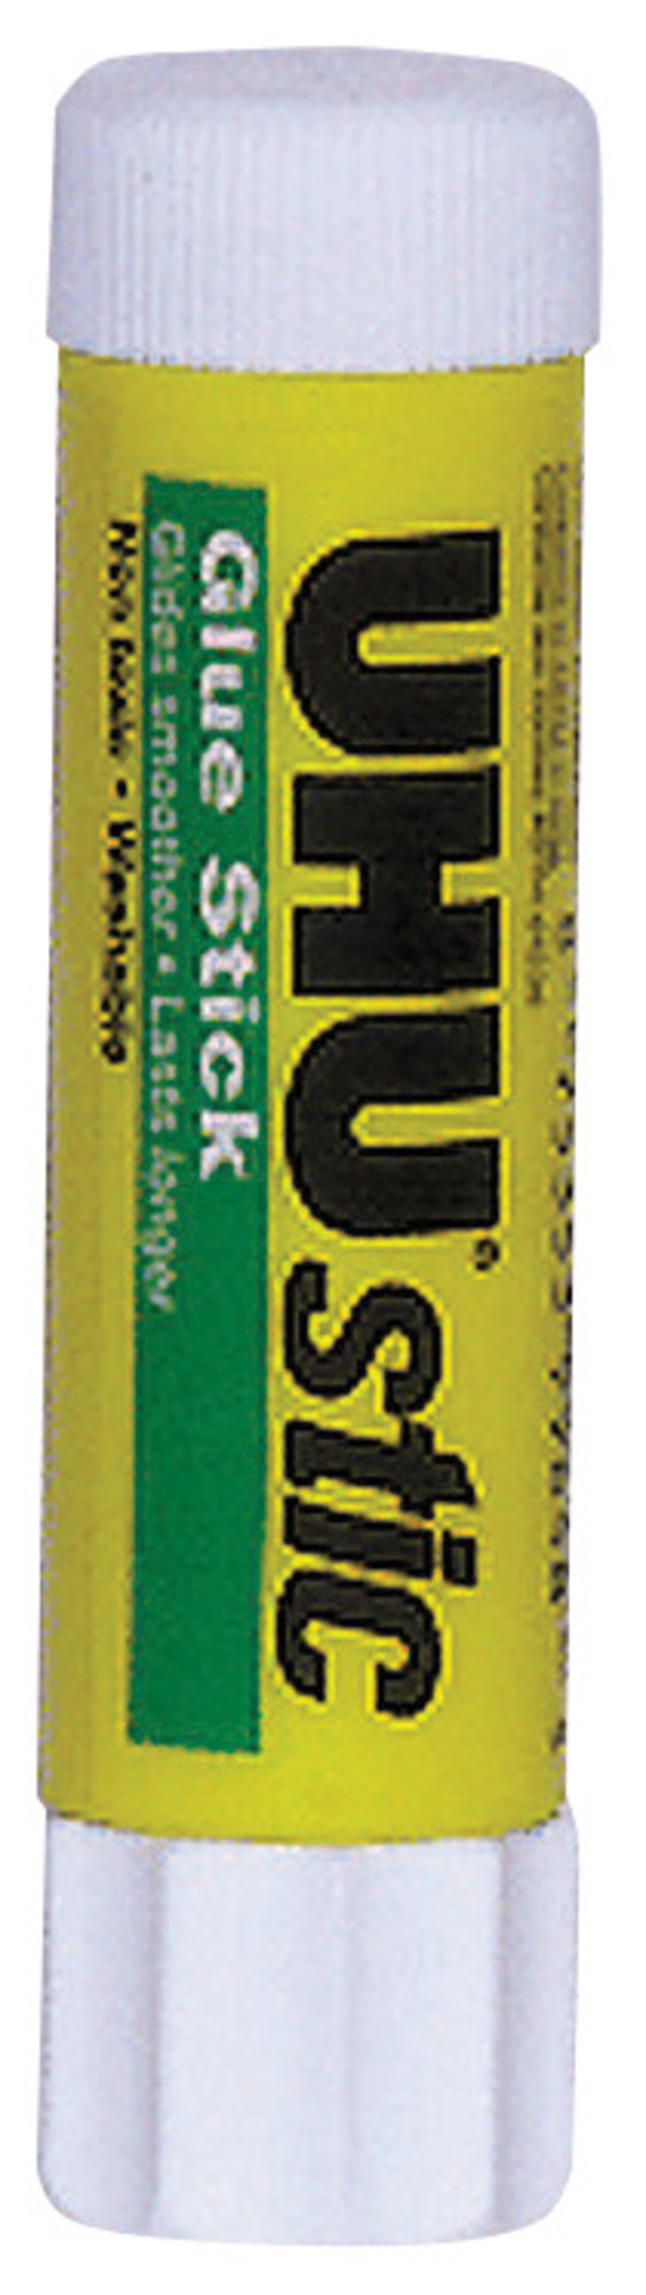 Glue Sticks, Item Number 037088